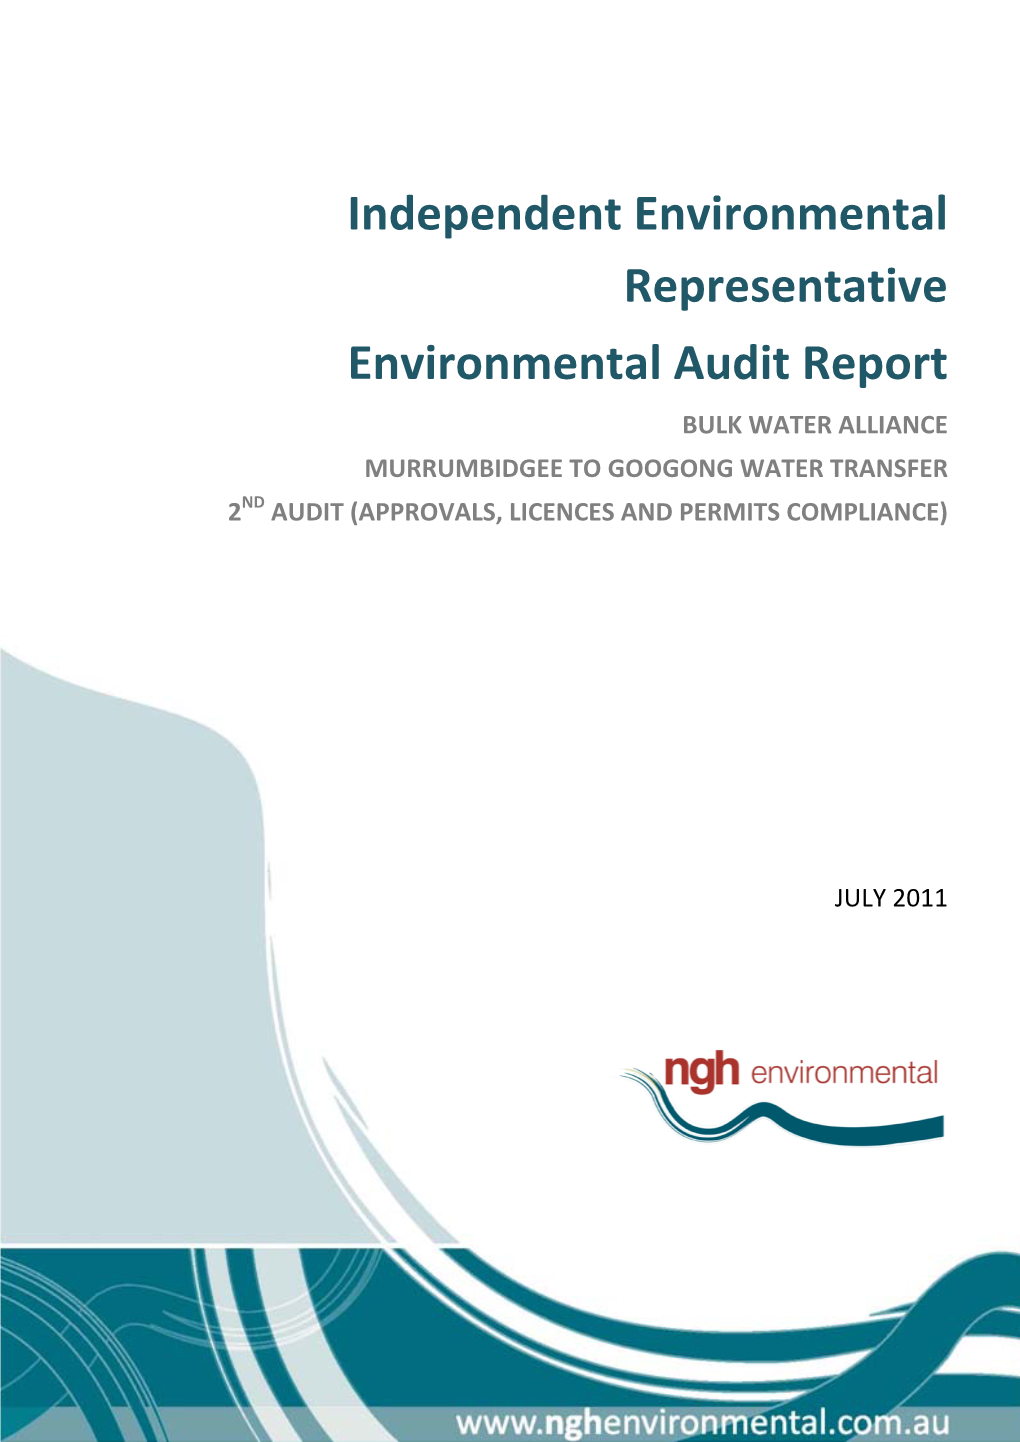 Independent Environmental Representative Environmental